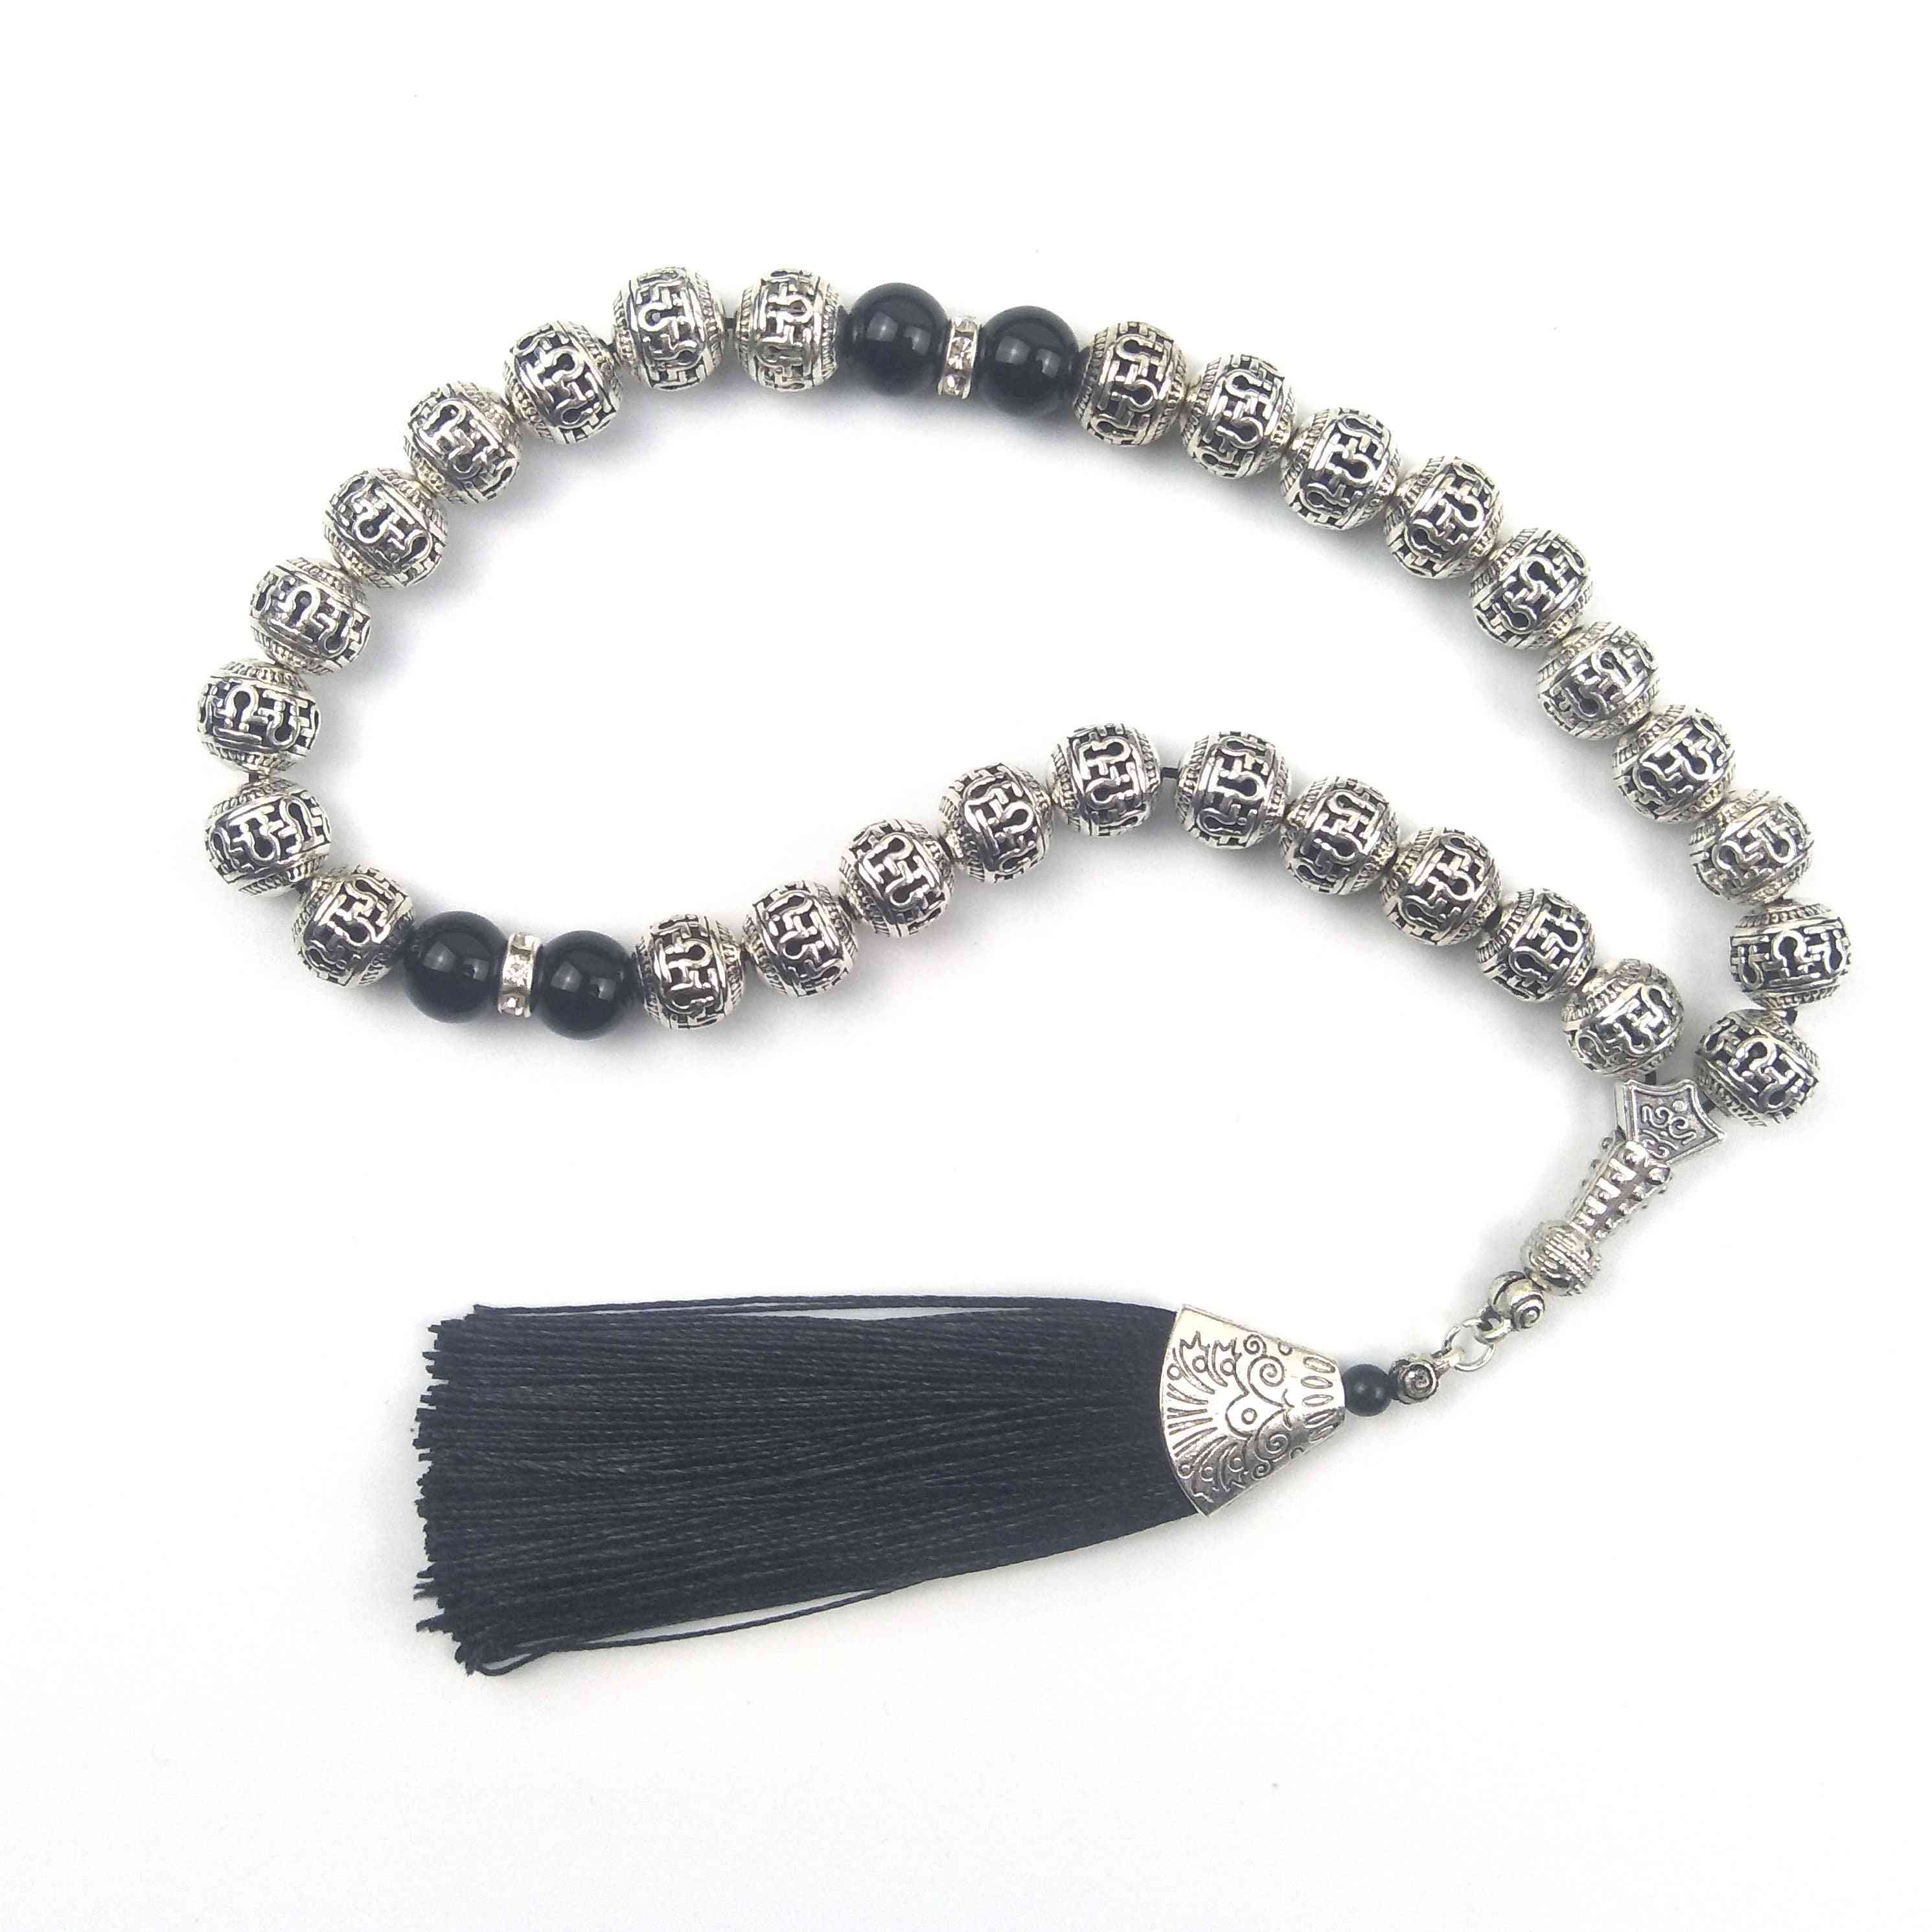 10mm Silver Plated Prayer Beads With Black Tassel Bracelet